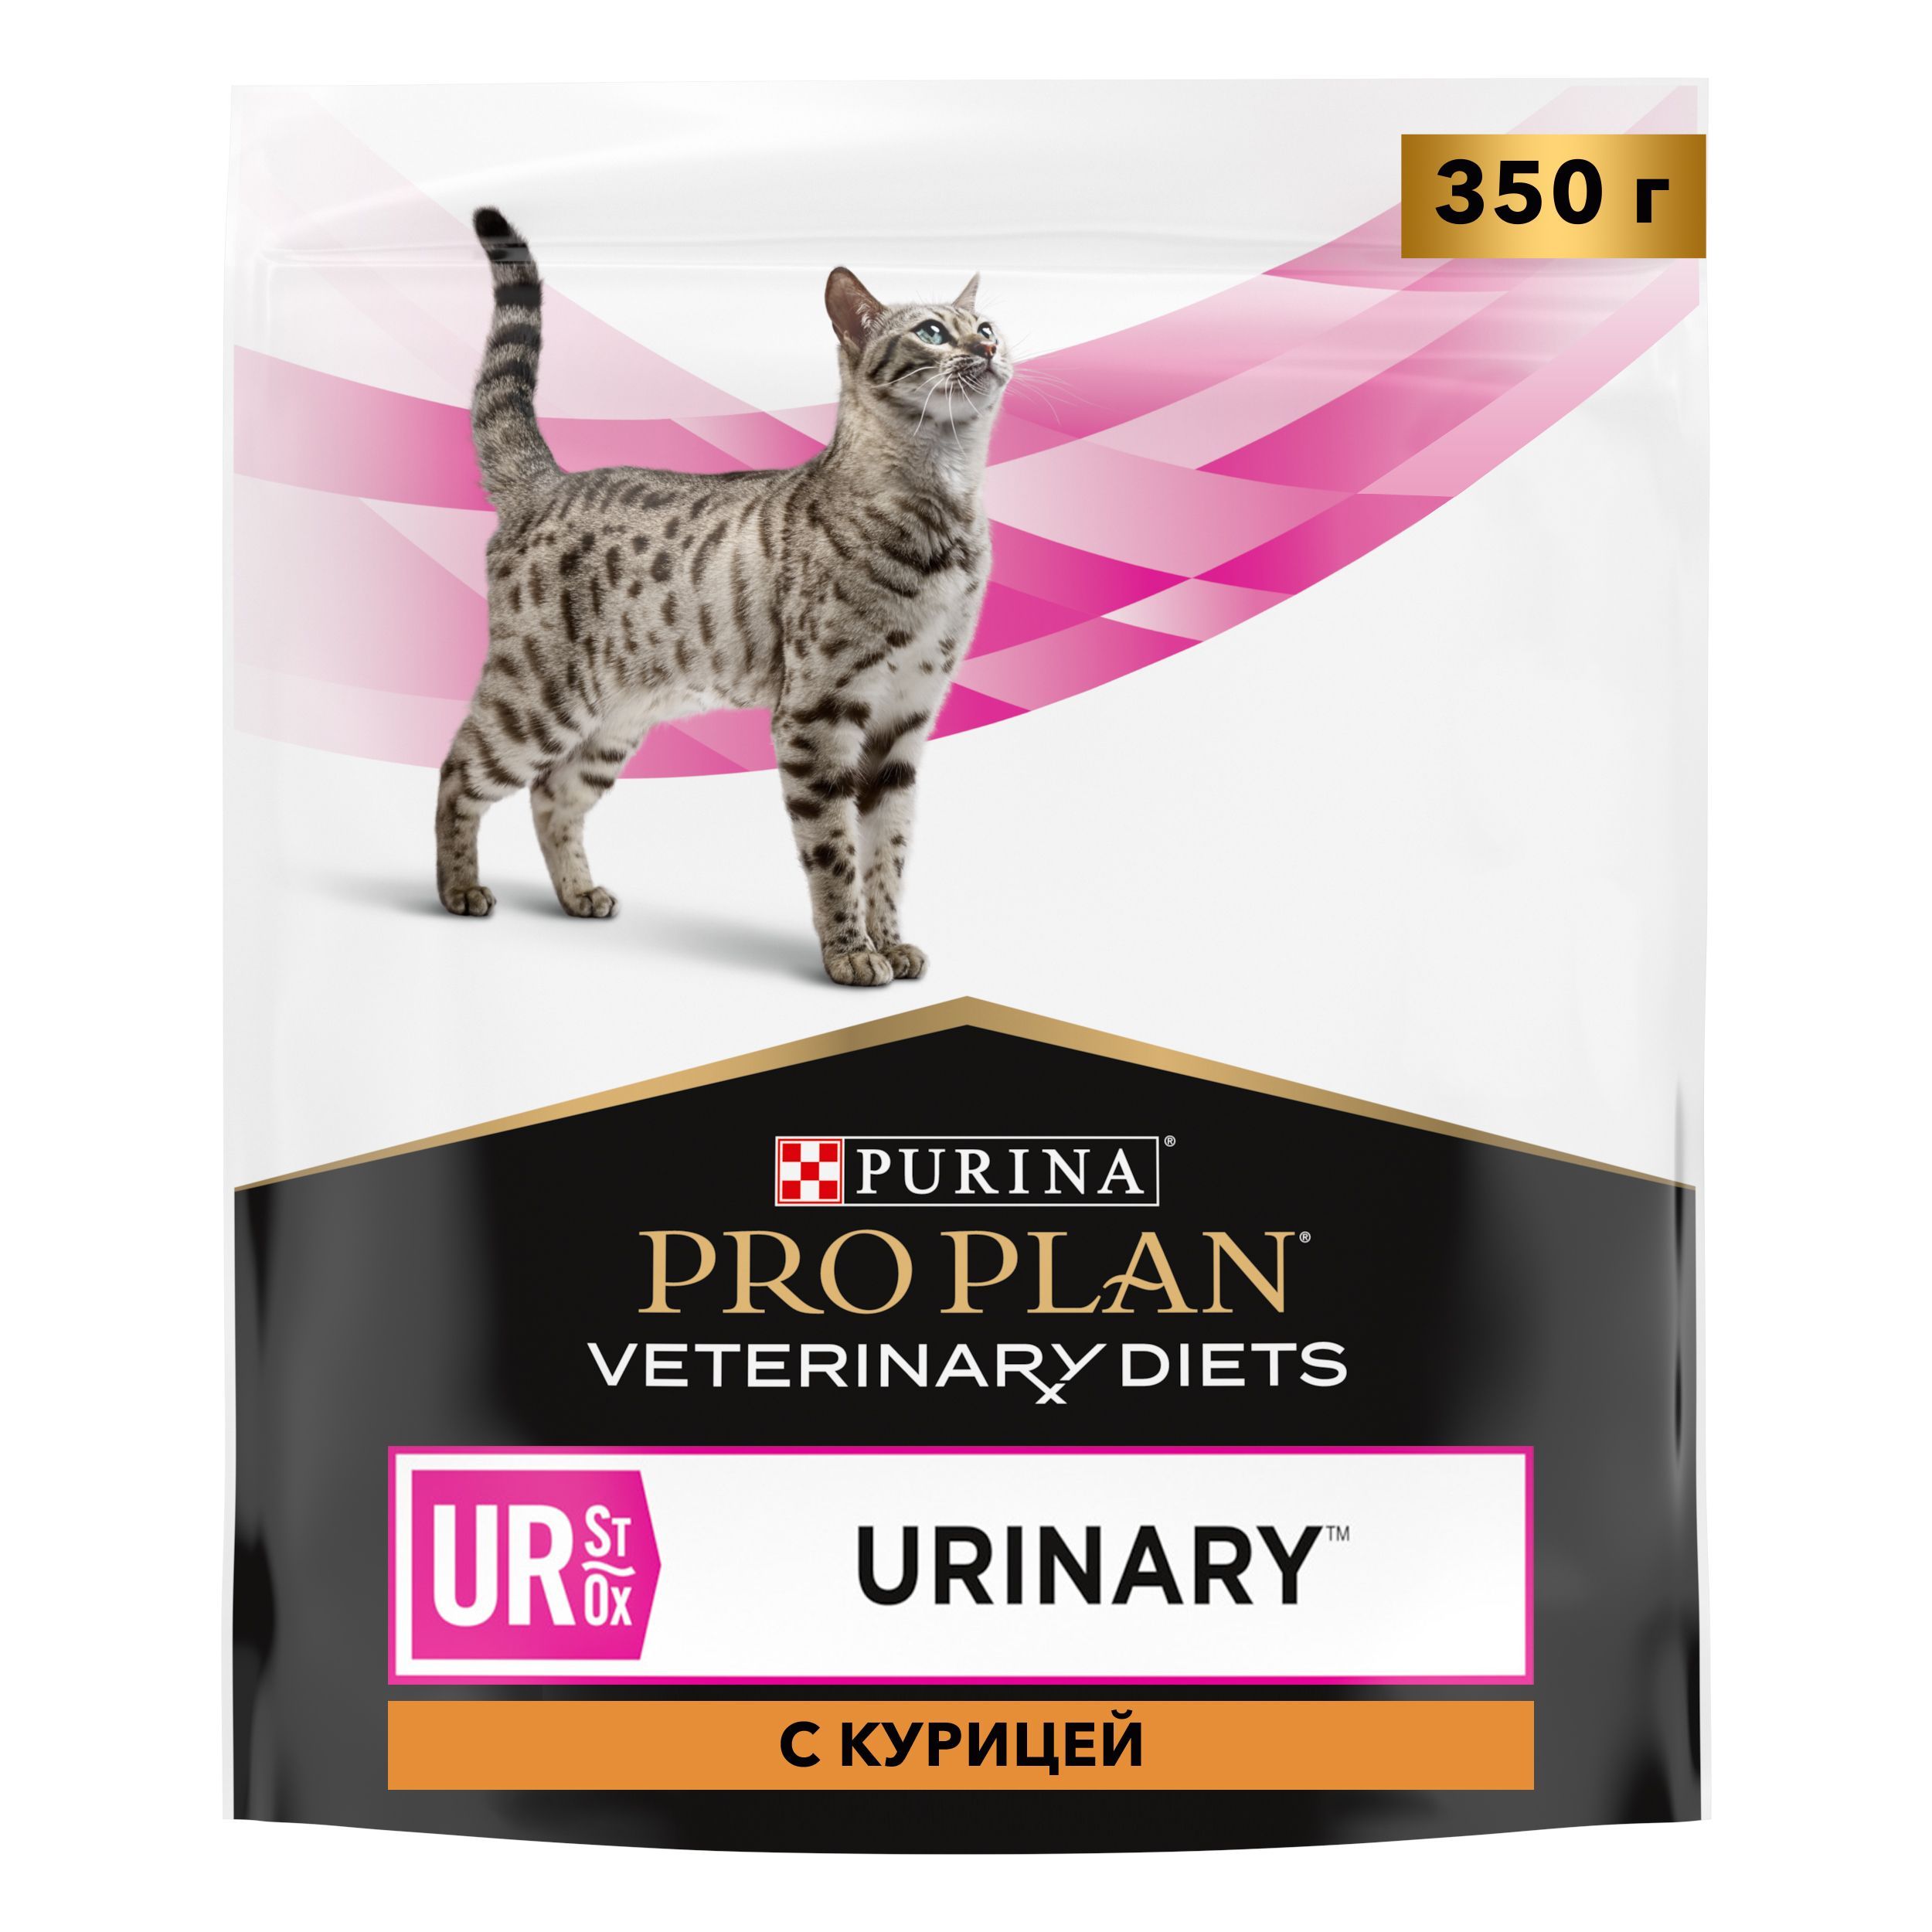 Pro plan veterinary urinary для кошек. Пурина Уринари для кошек сухой. Пурина Уринари для кошек. Purina Urinary. Пурина Уринари.